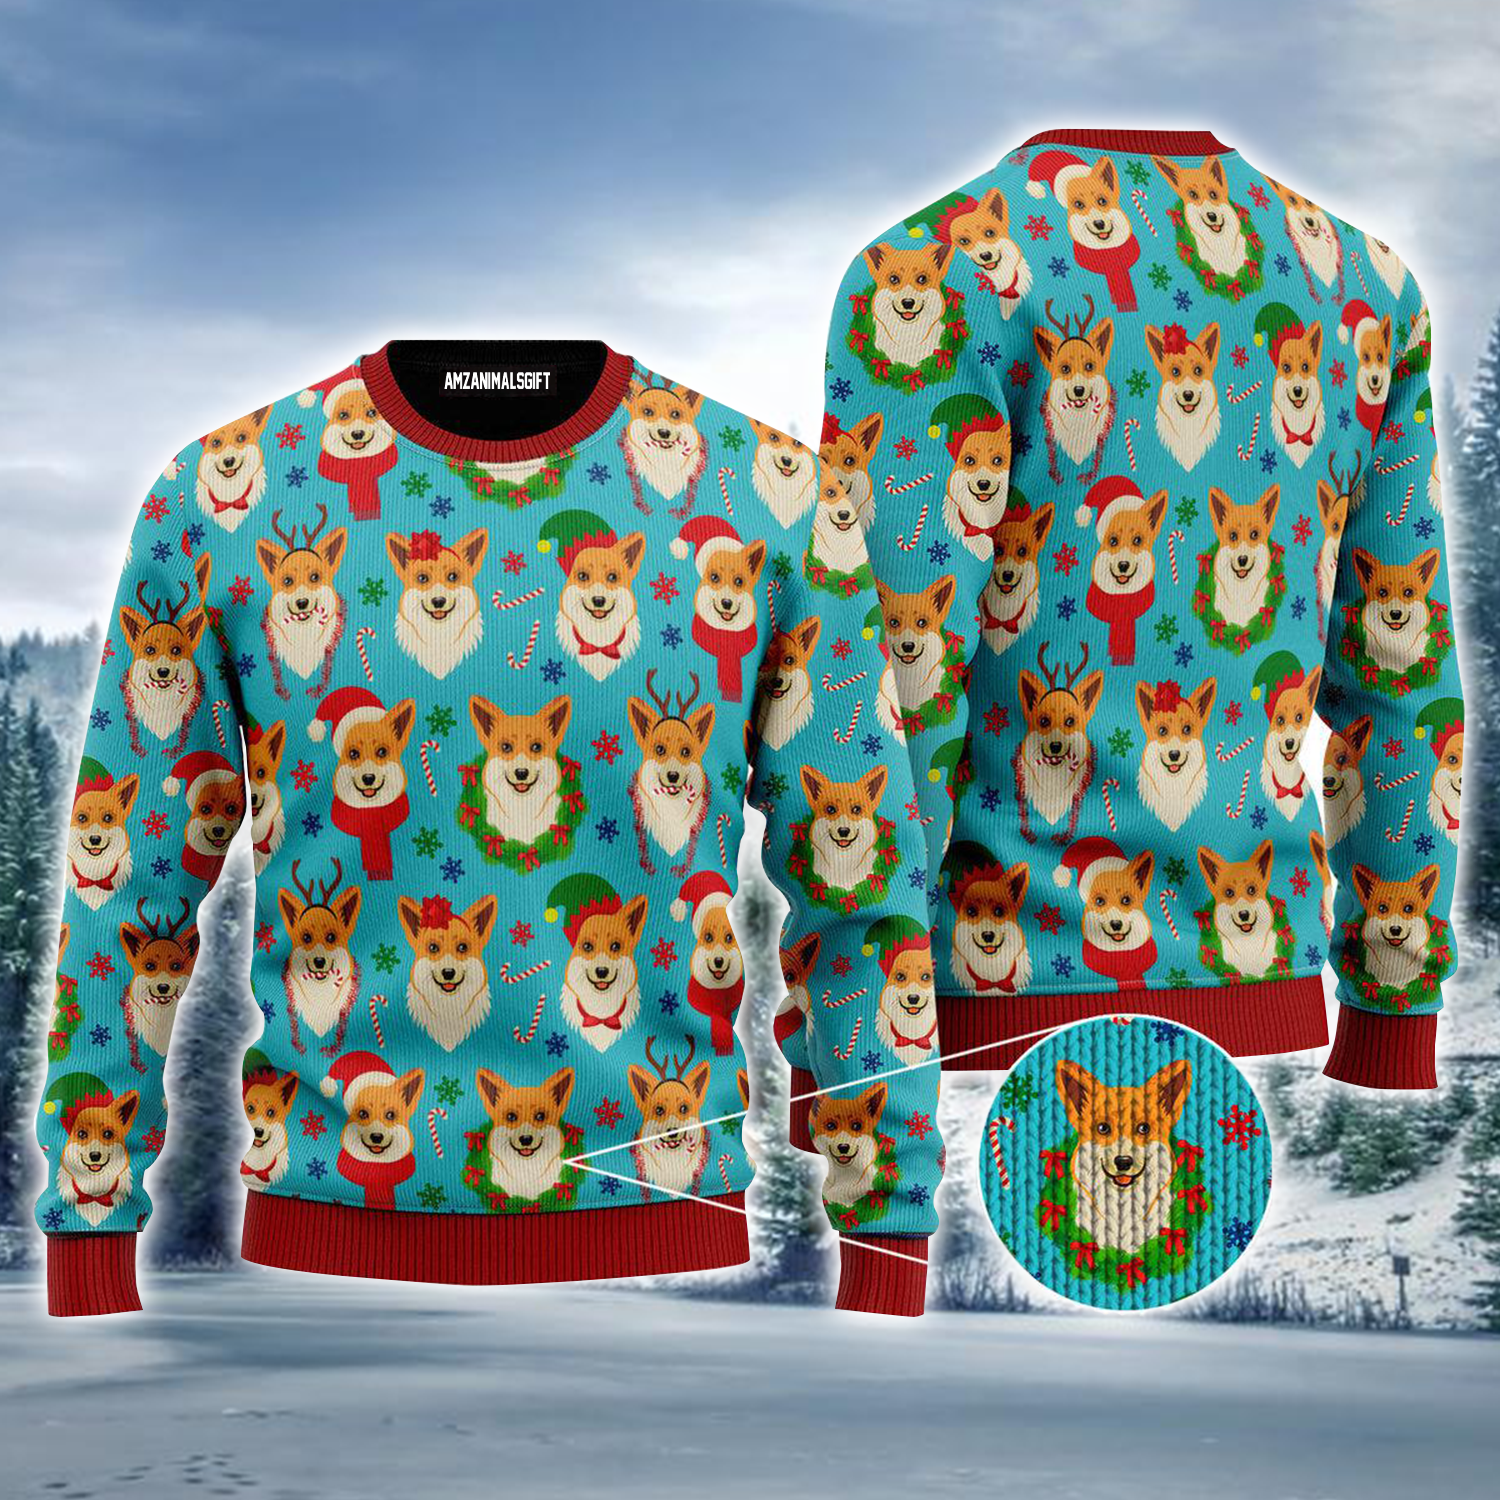 Corgi Dog Ugly Sweater, Funny Christmas Corgi Dog Ugly Sweater For Men & Women, Perfect Gift For Corgi Lovers, Friends, Family